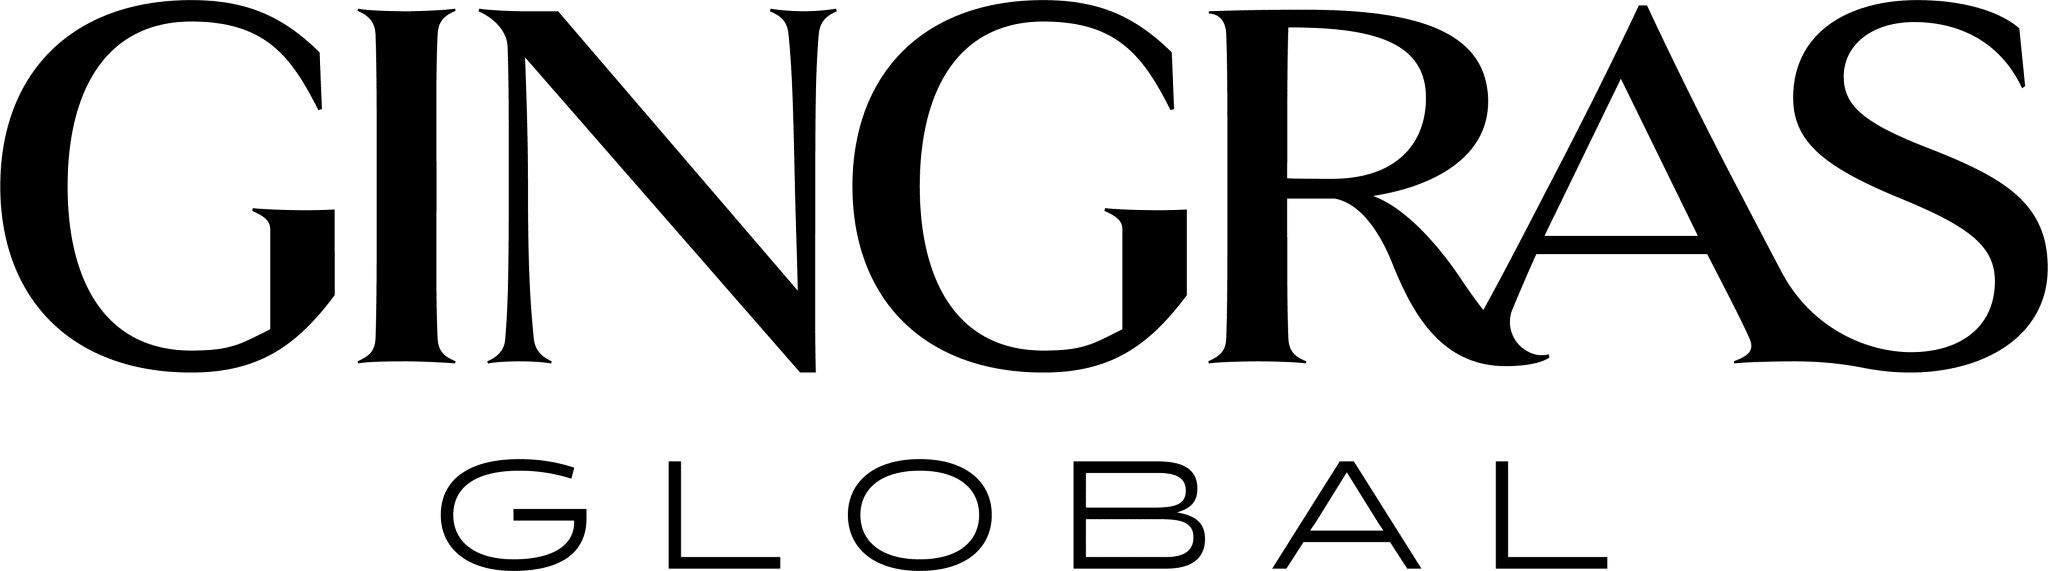 Sponsorship - Christian Business Round Table | Gingras Global : 